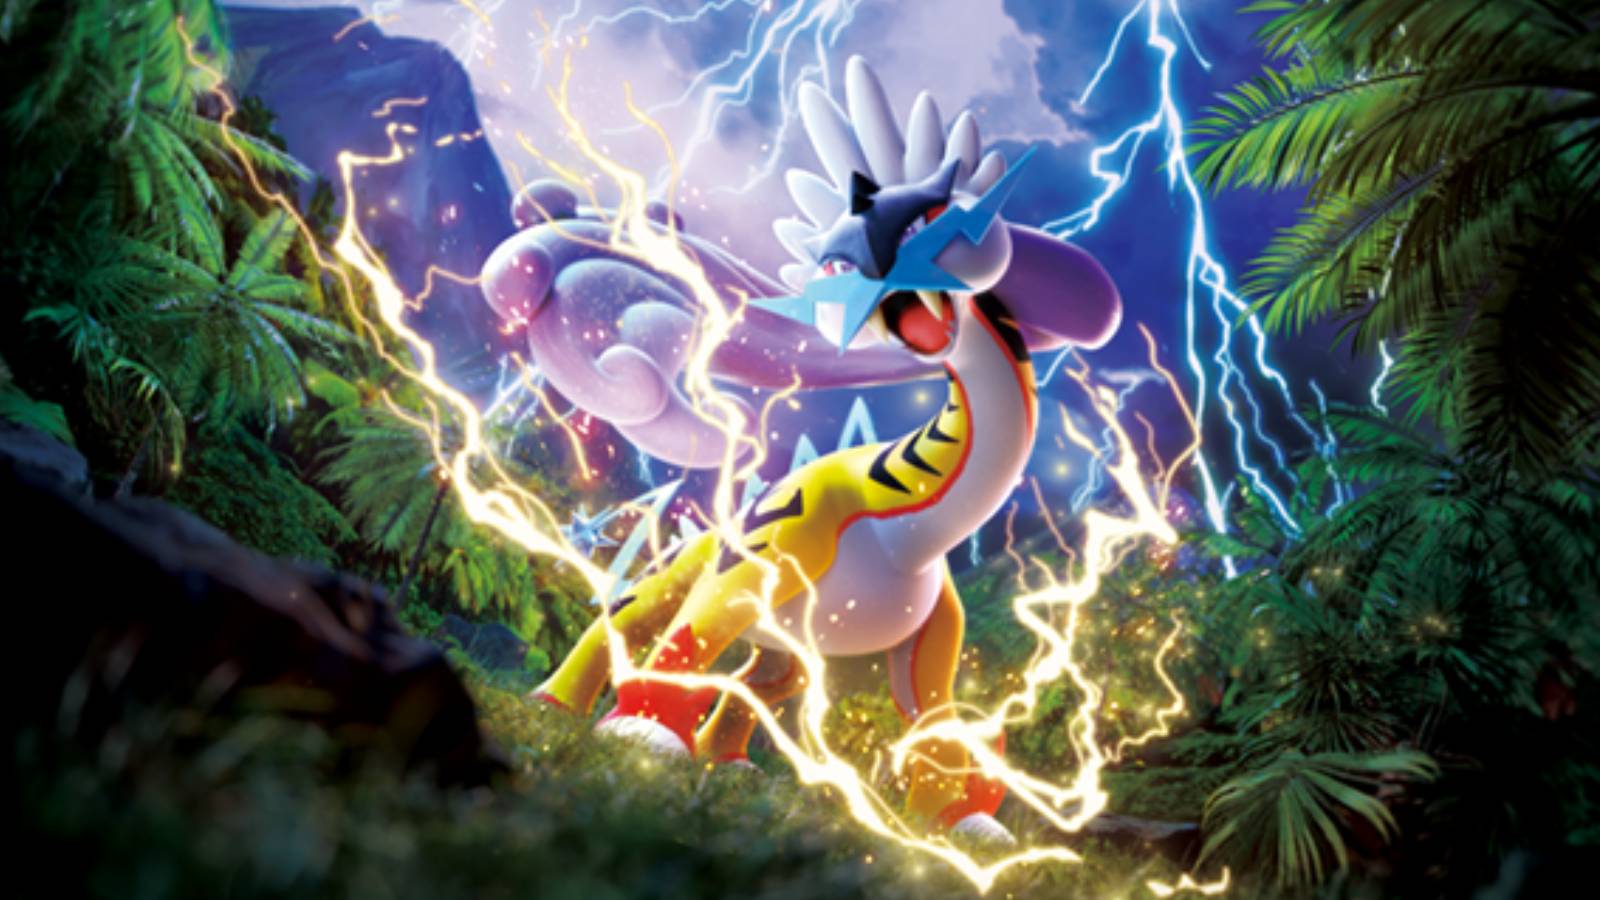 Key art for Pokemon TCG Temporal Forces shows the Pokemon Raging Bolt